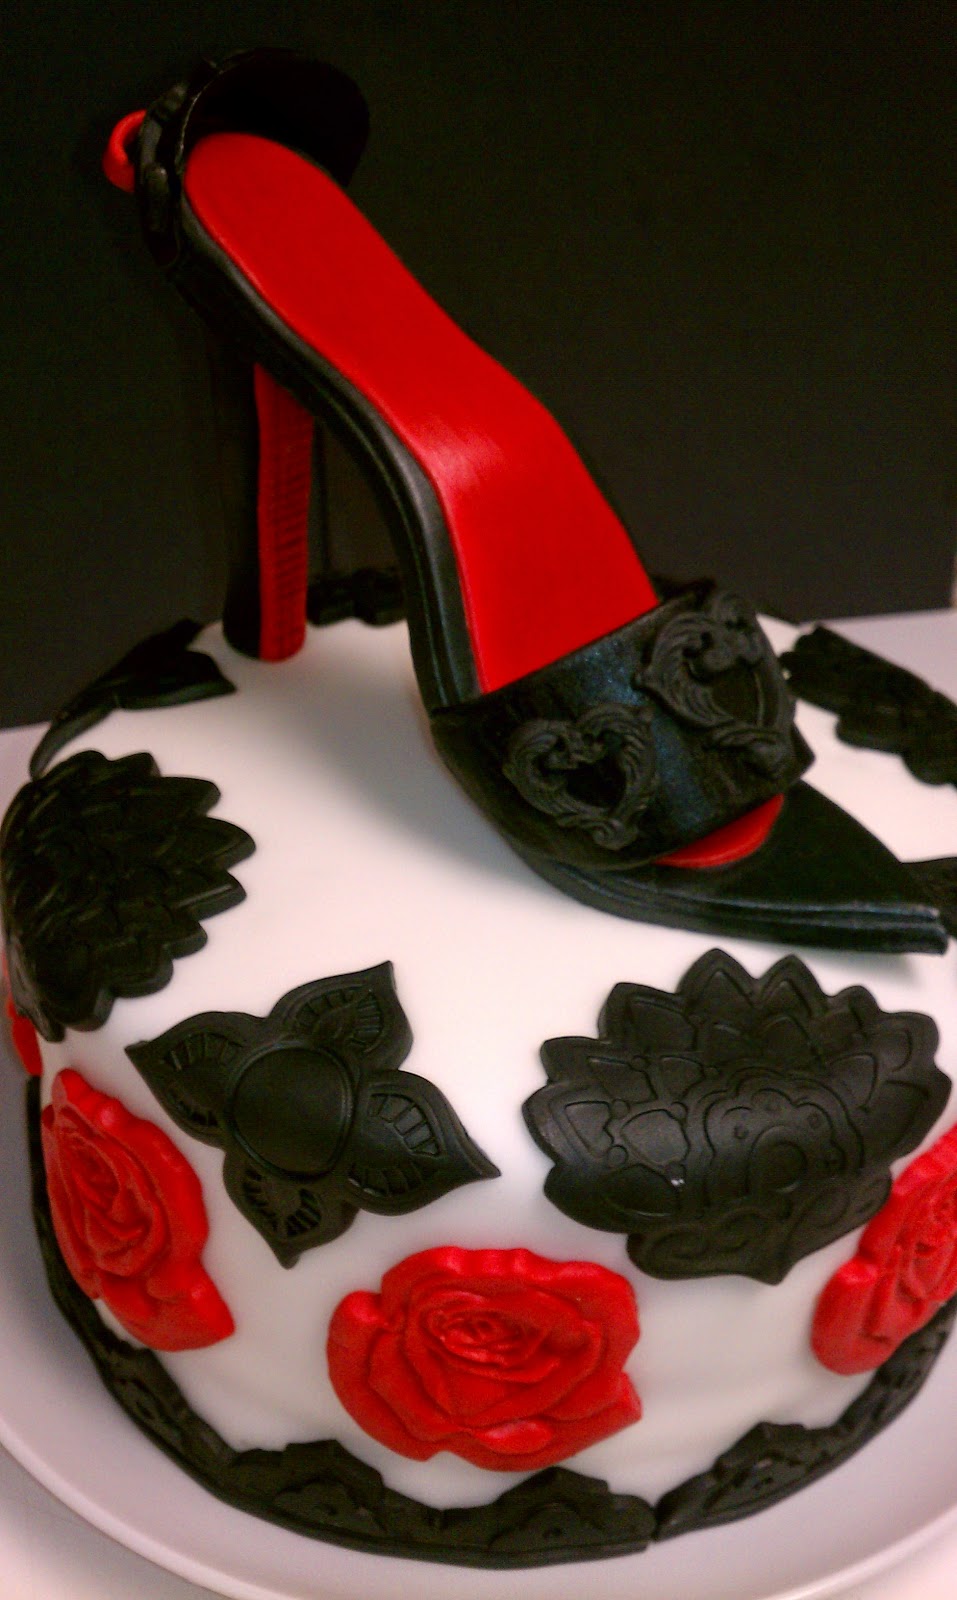 the birthday cake beautiful shoe to a dear